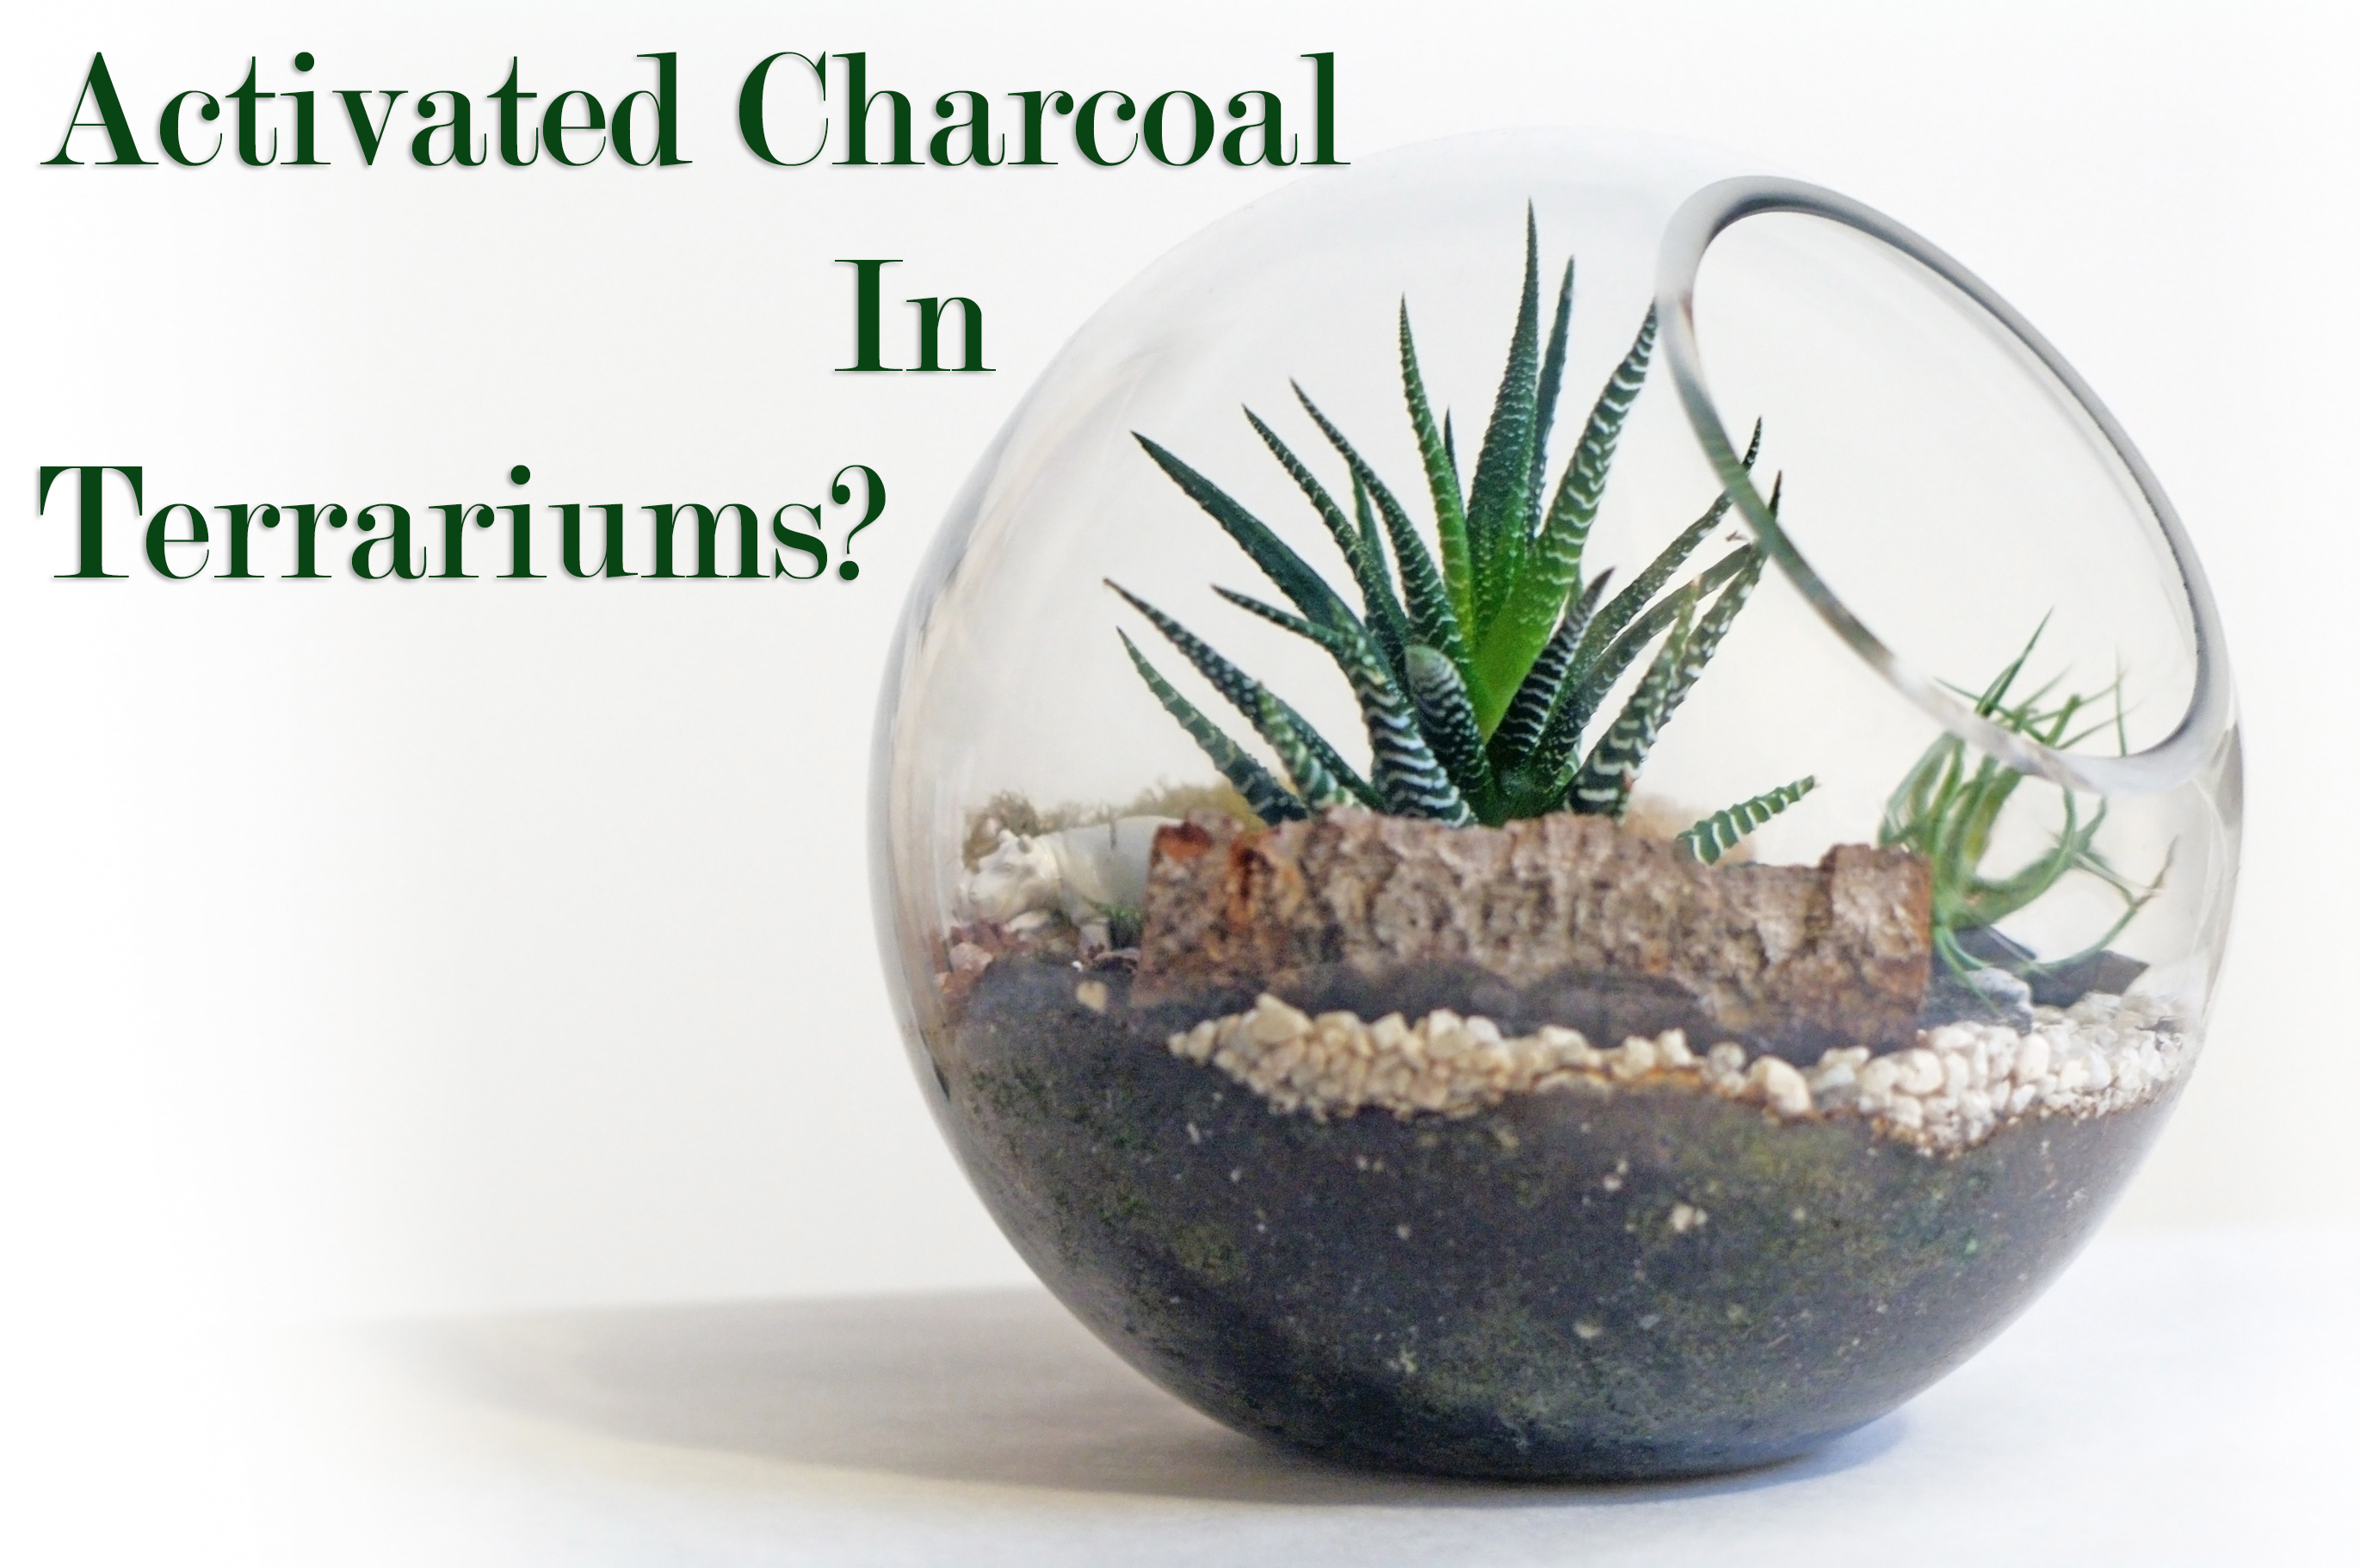 Terrariums for web - Charcoal in Terrariums